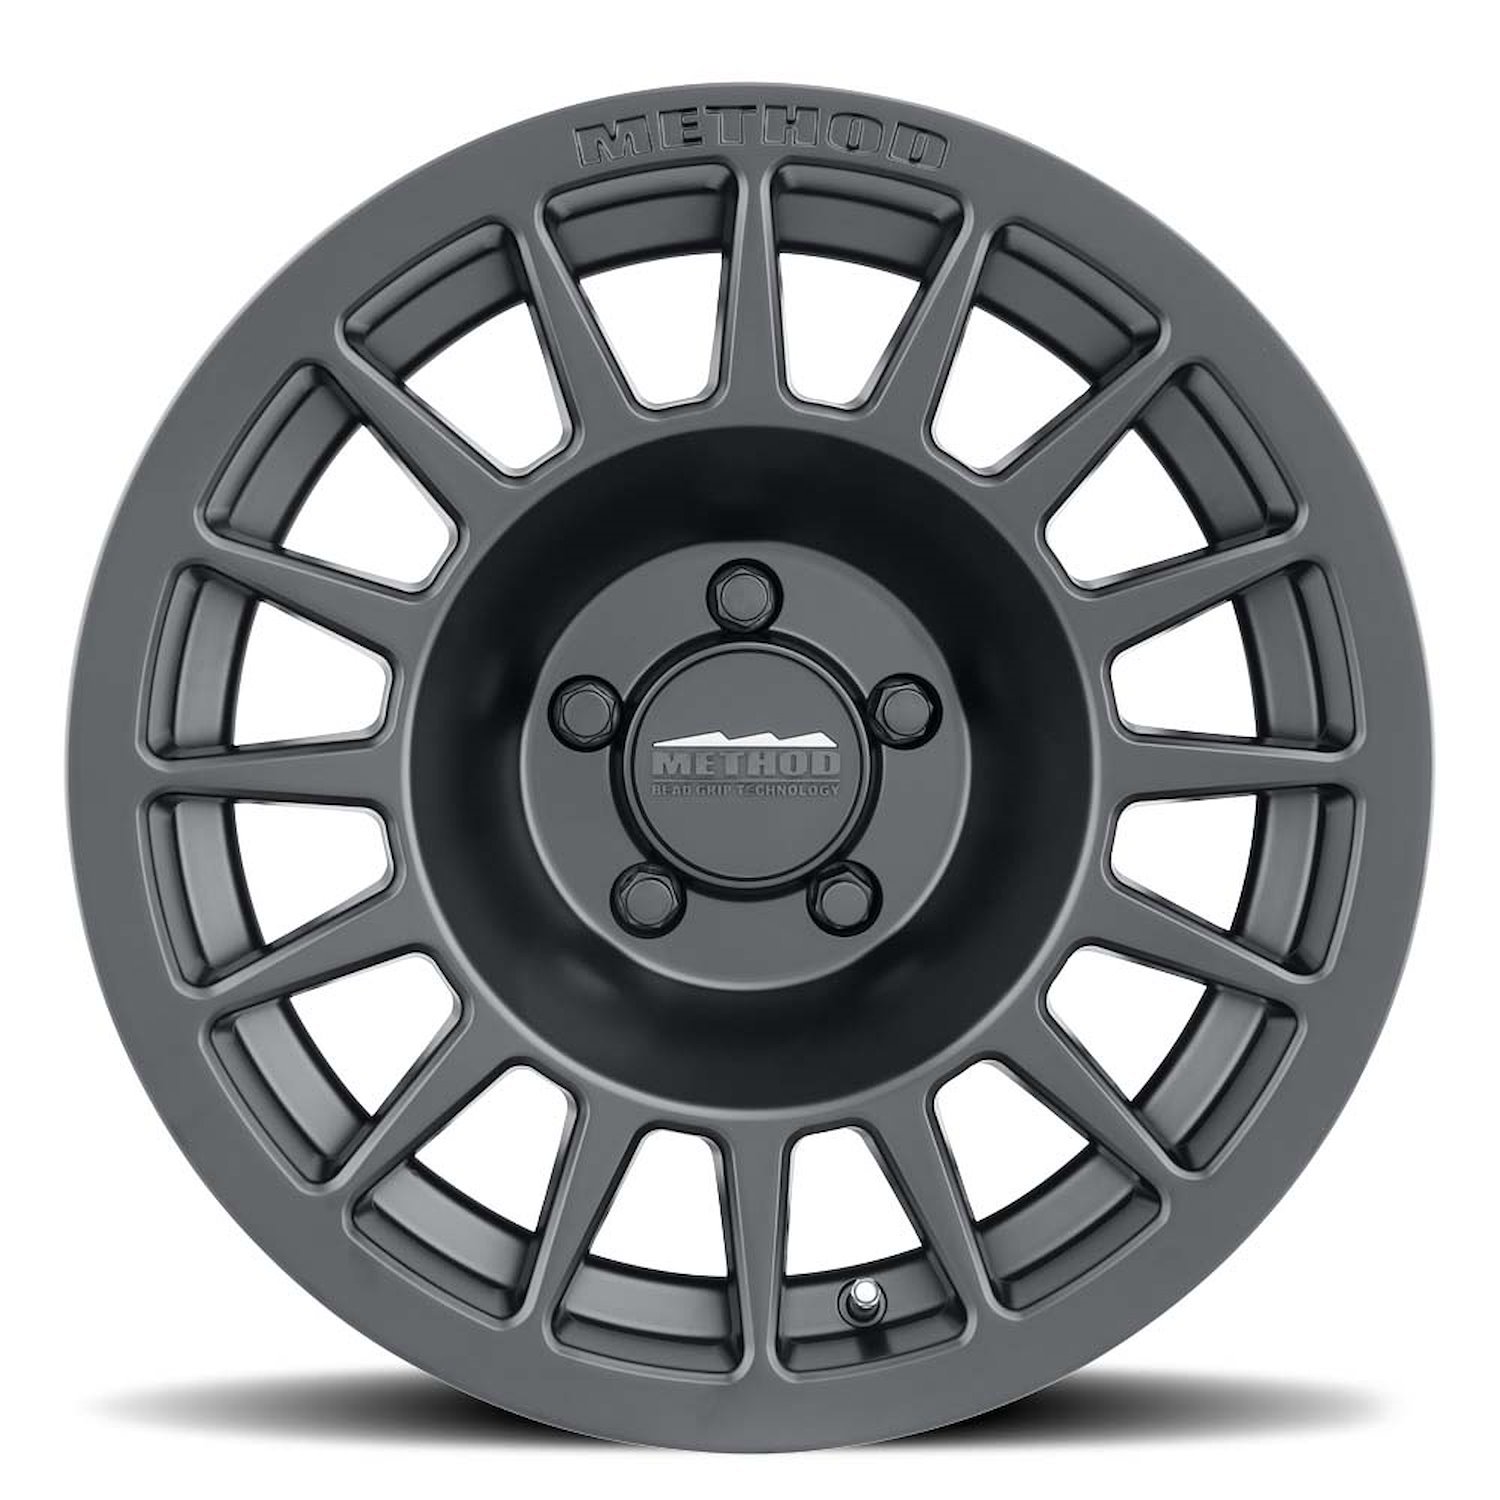 MR70778512538 TRAIL MR707 Bead Grip Wheel [Size: 17" x 8.5"] Matte Black